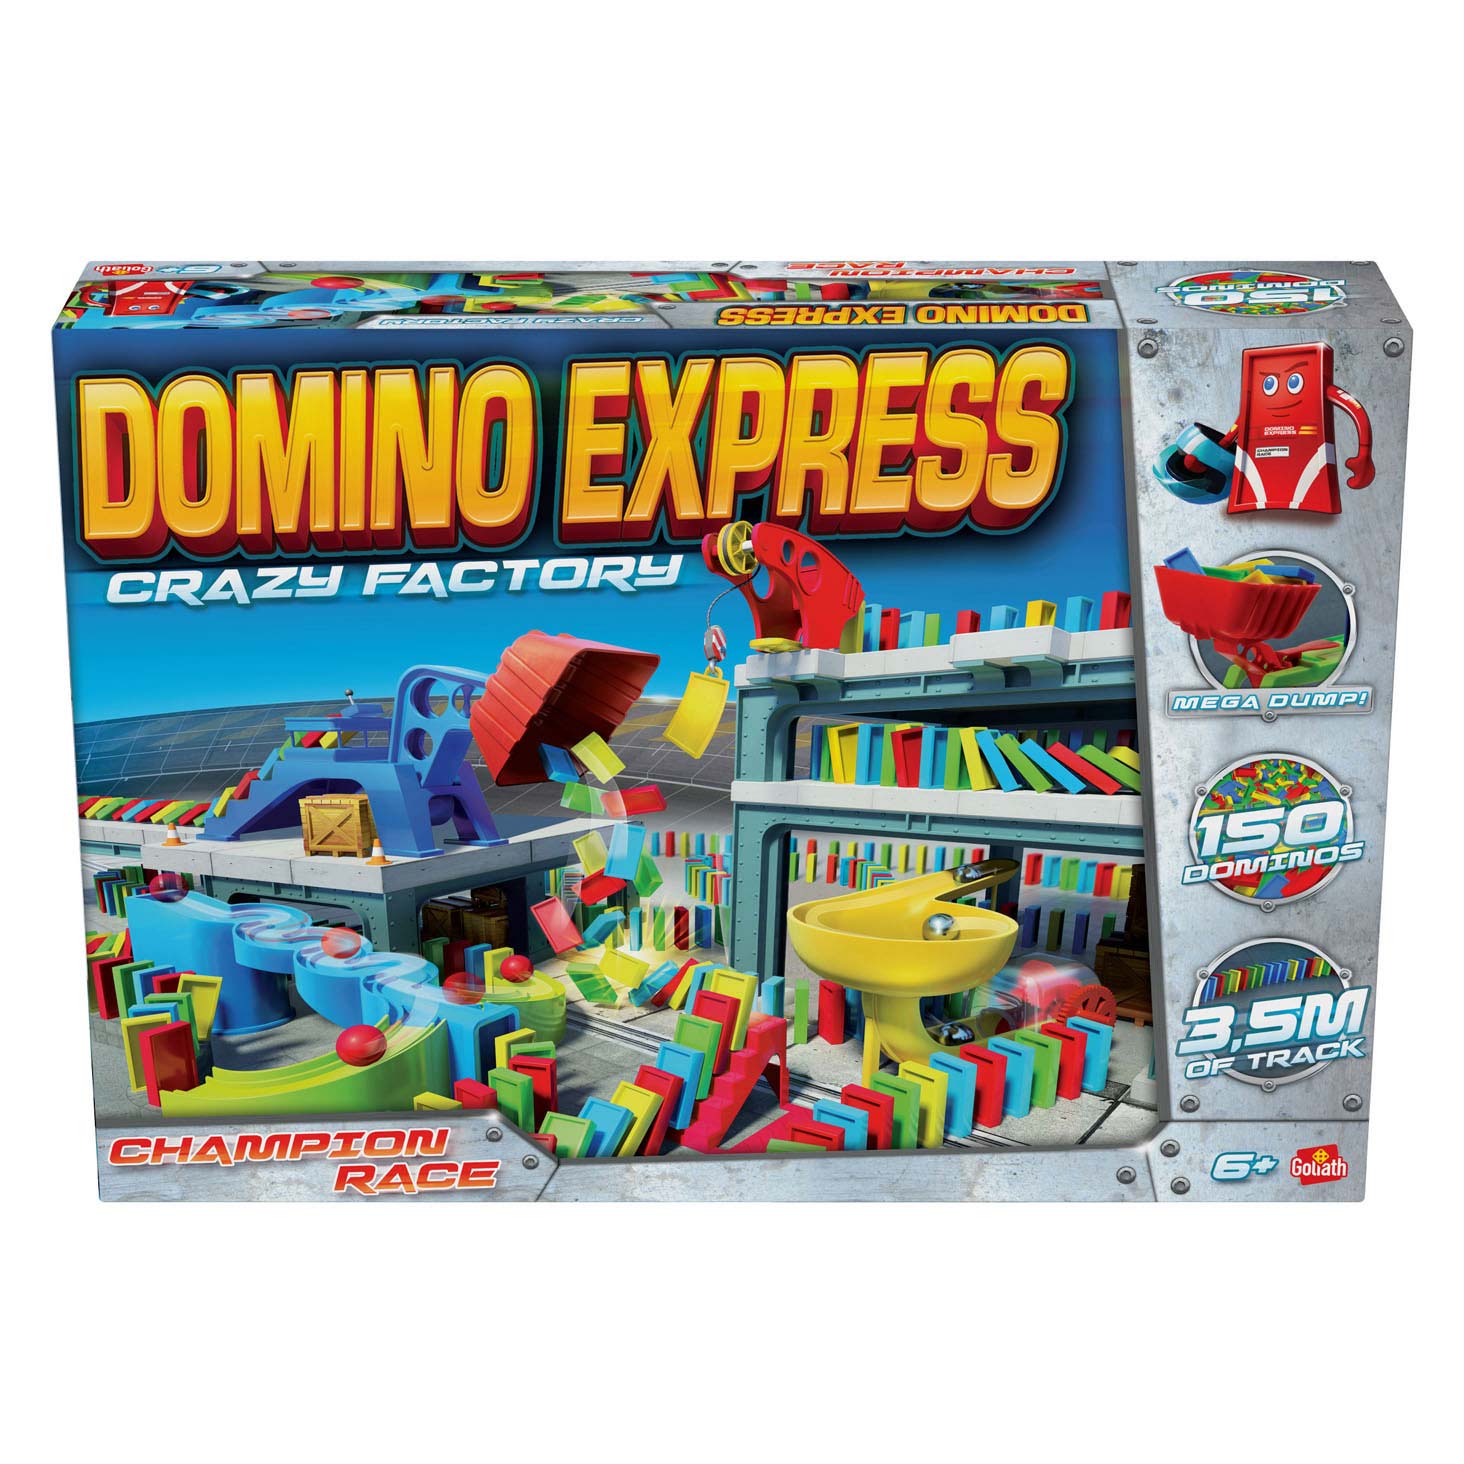 Domino Express Crazy Factory